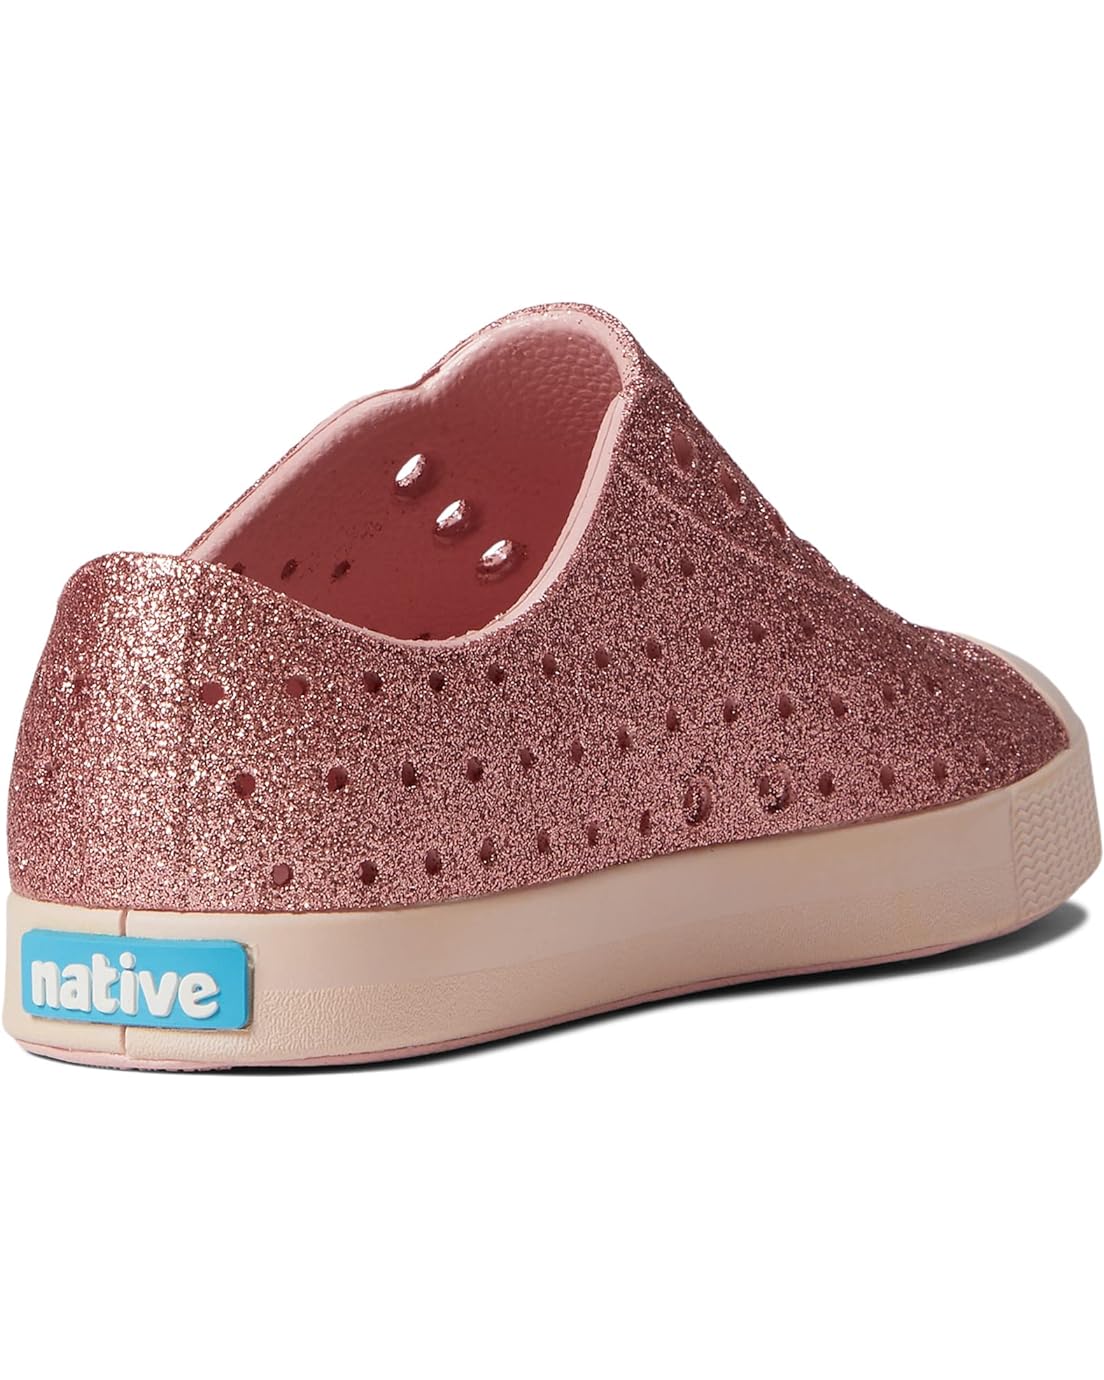  Native Shoes Kids Jefferson Bling Glitter (Little Kid)